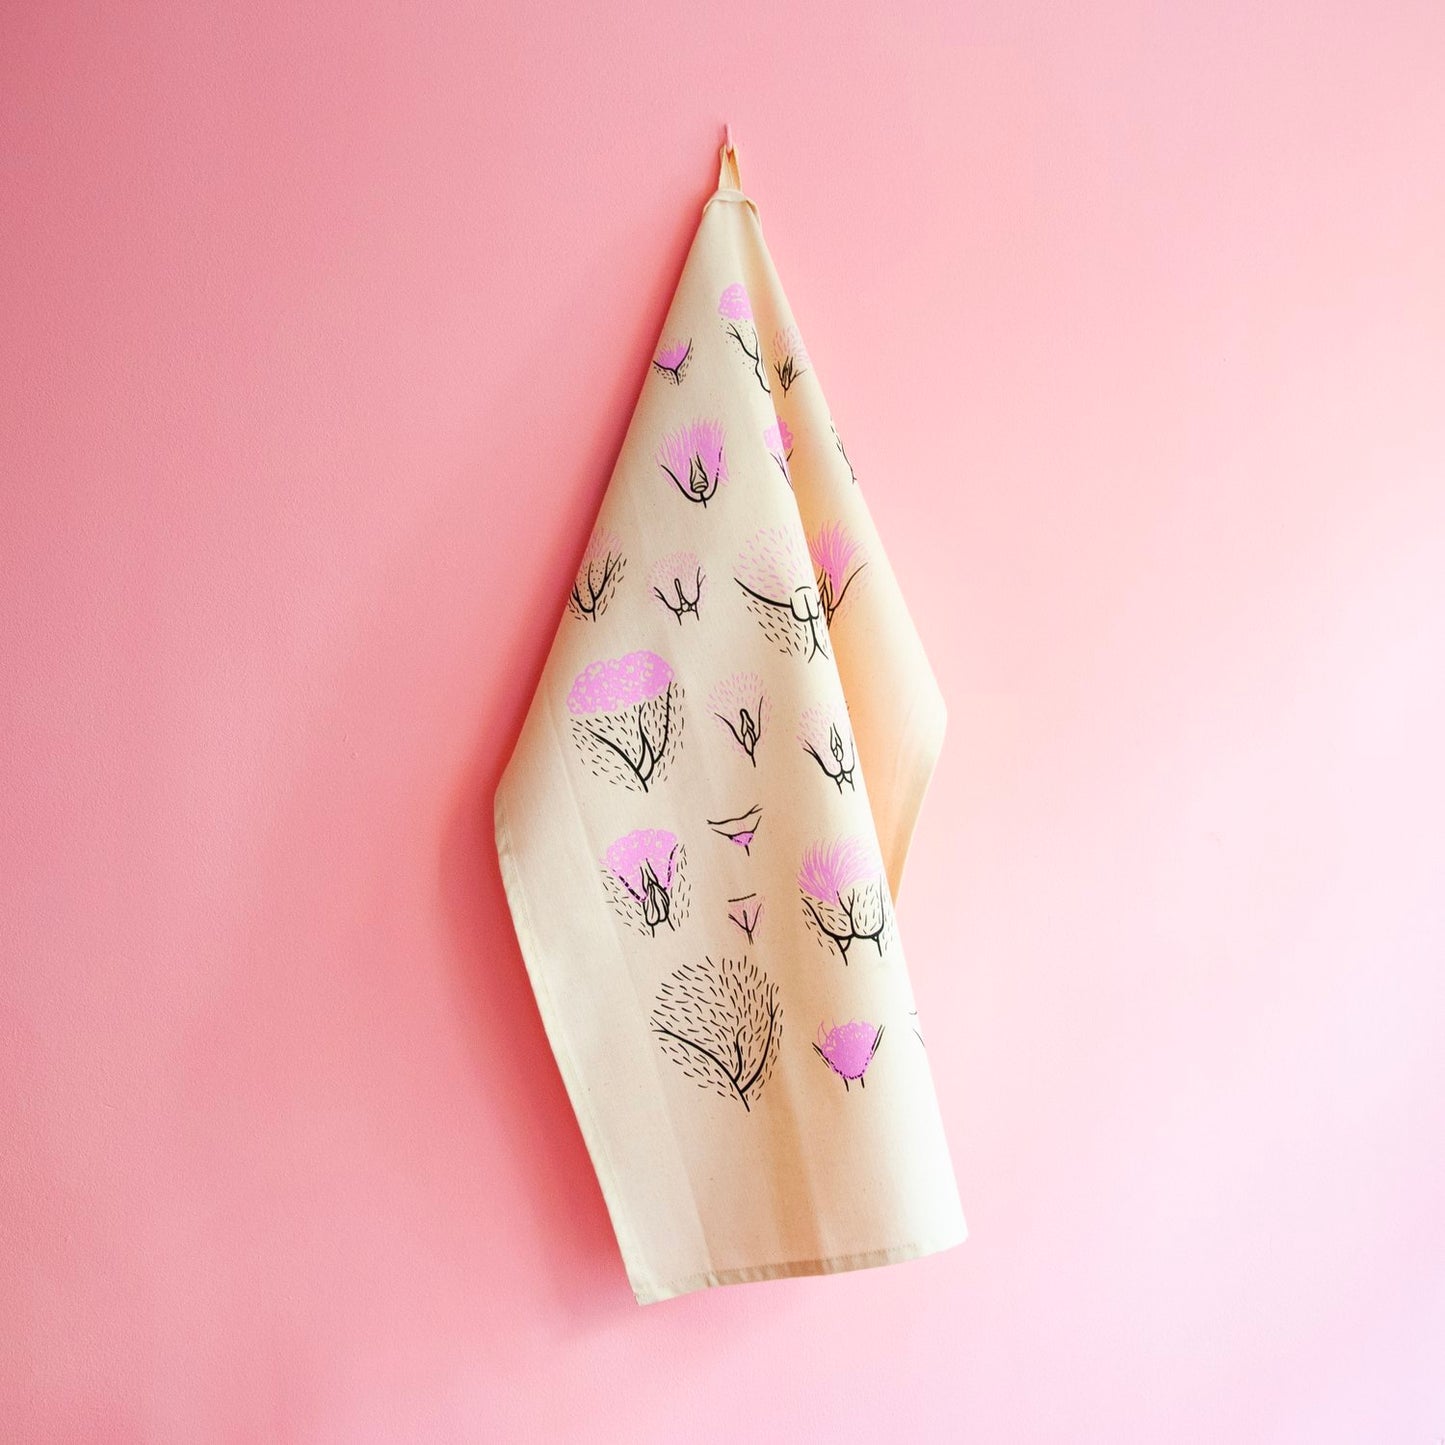 Organic Tea Towel "Vulva Diversity" by The Vulva Gallery